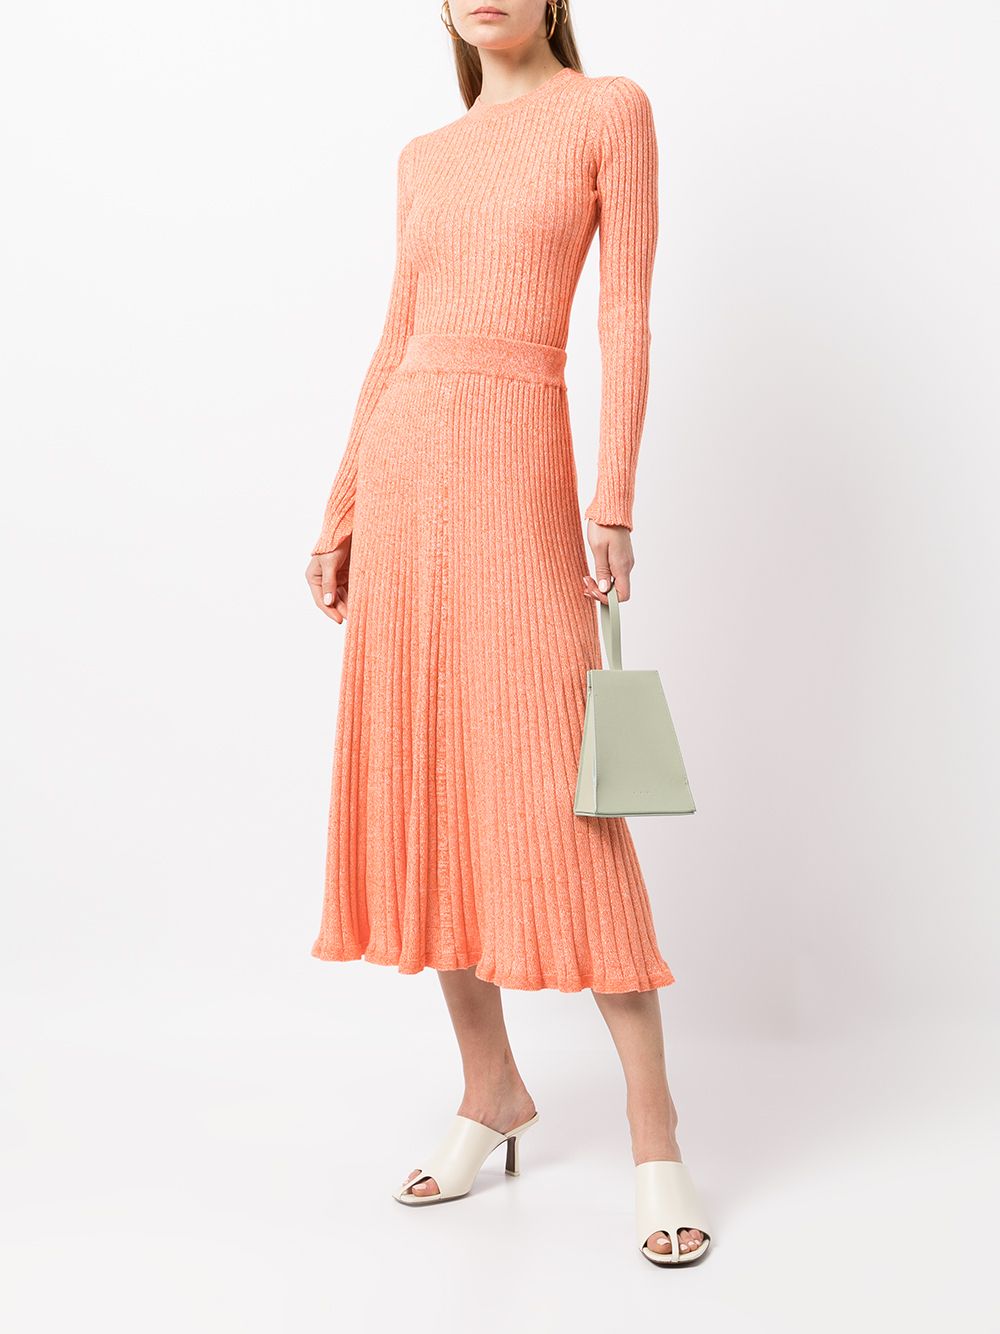 Alemais Elesha Top and Felicia Skirt. Orange ribbed knit set for rent.